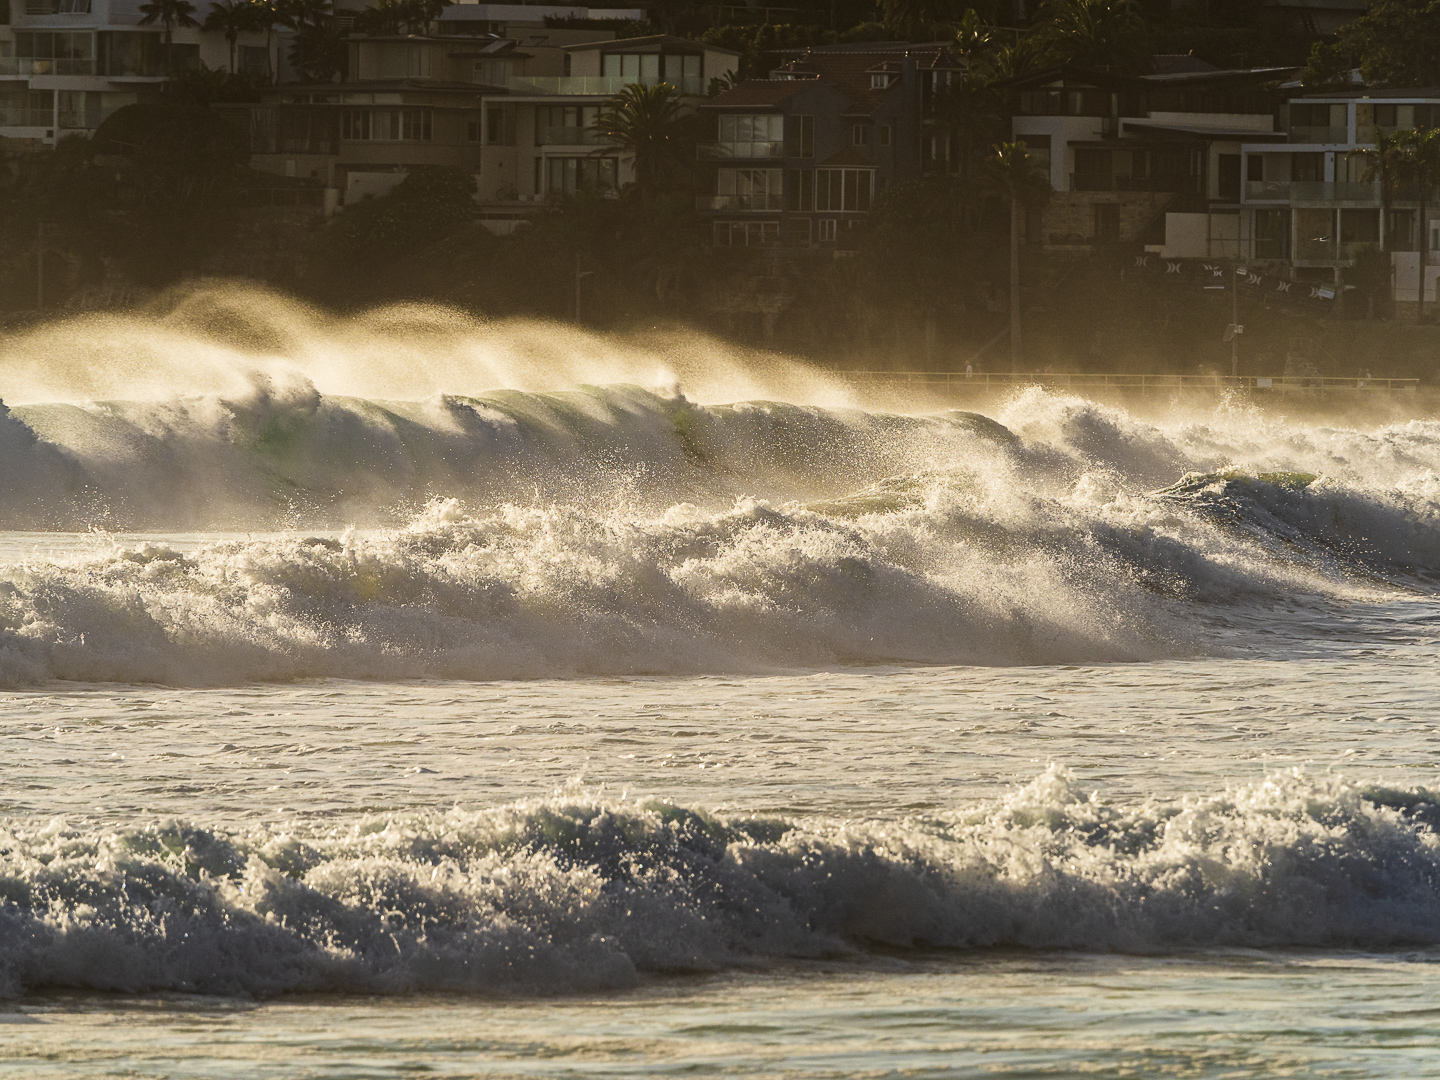 Big Swell from Cyclone Seth